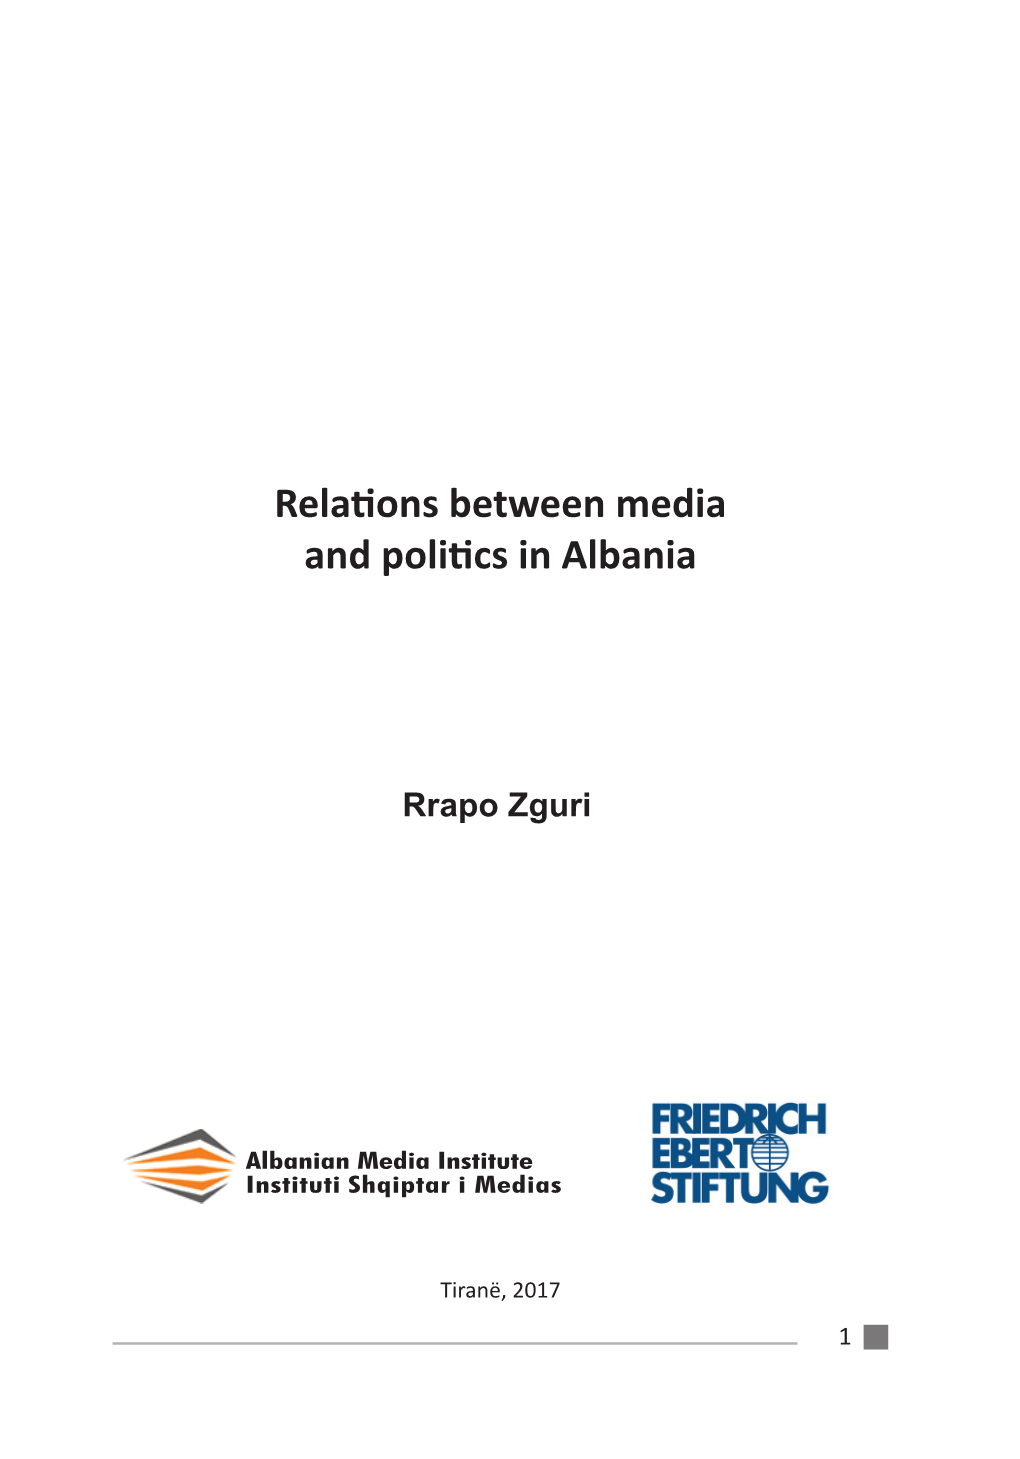 Relations Between Media and Politics in Albania